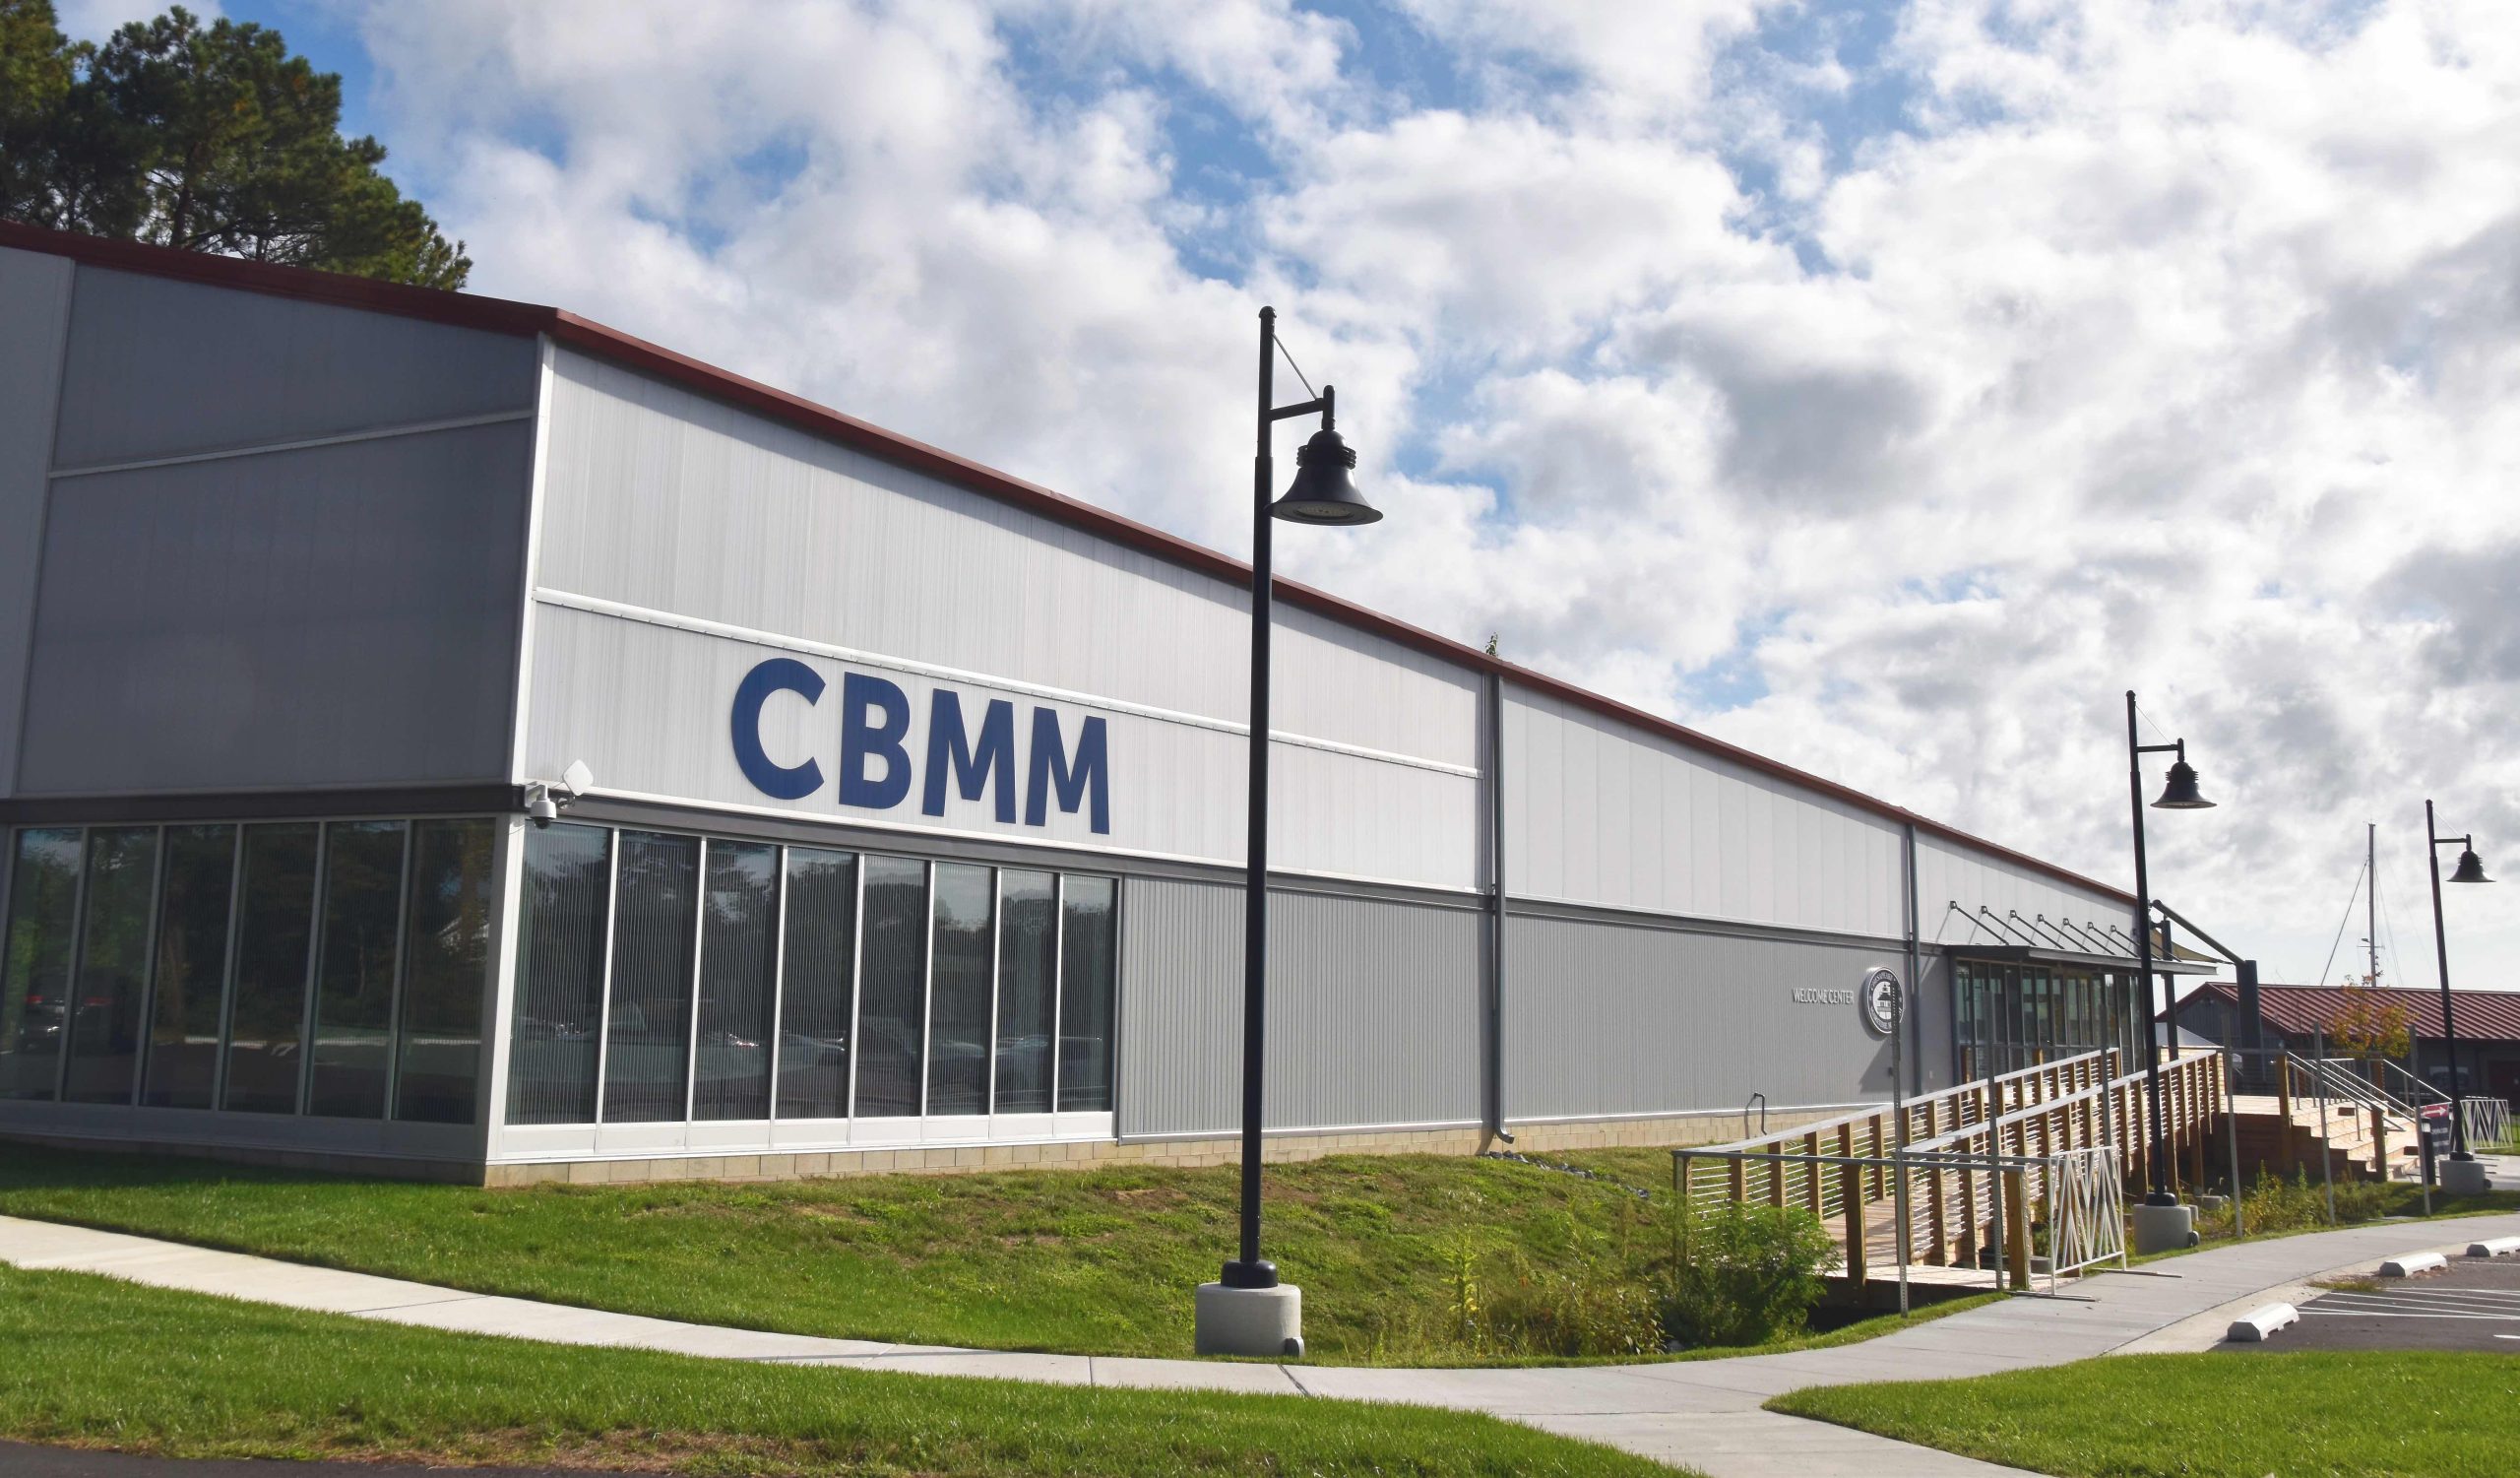 CBMM's new Welcome Center